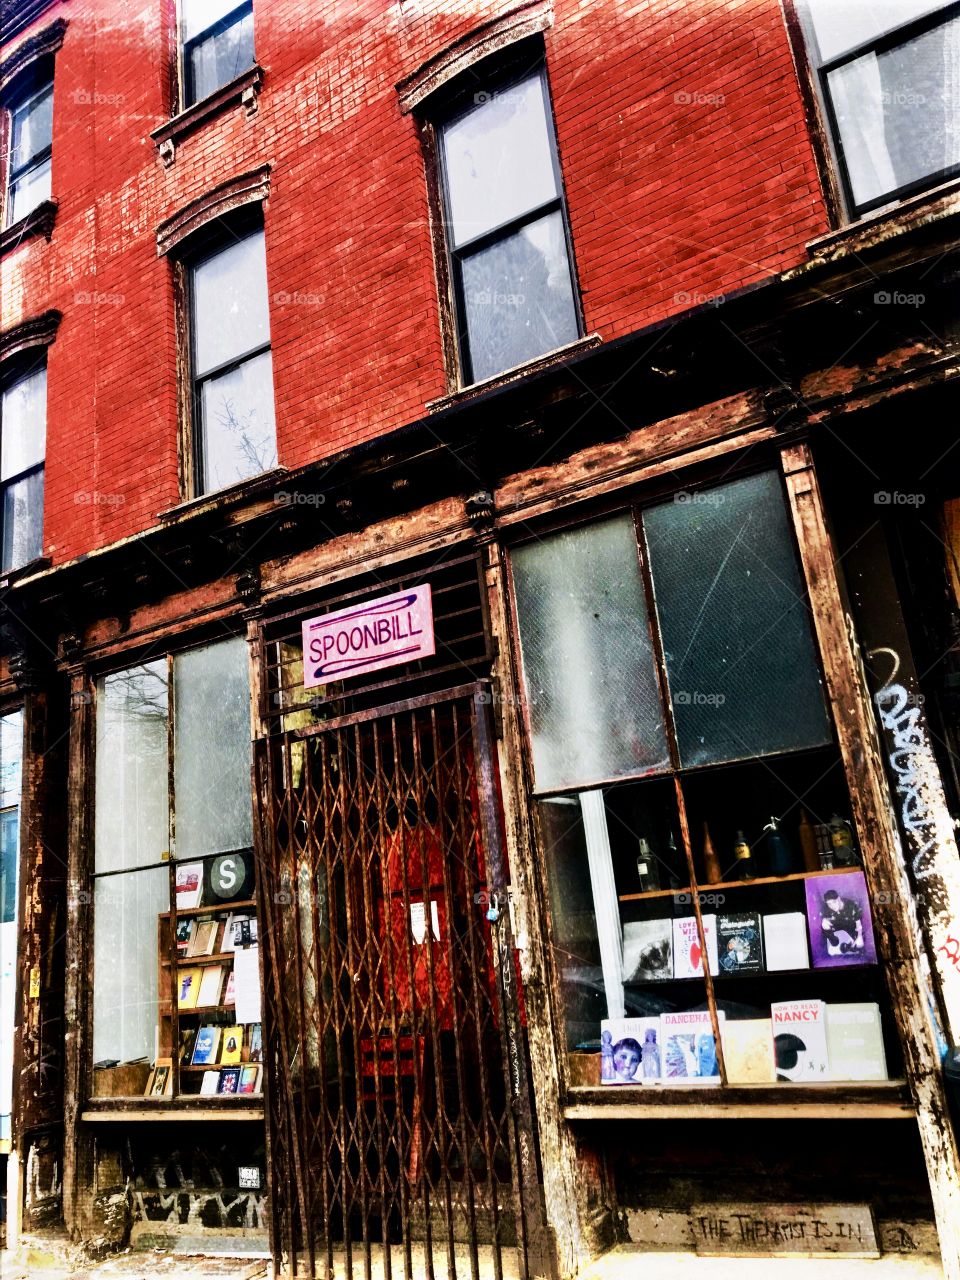 Street Photography taken today in Williamsburg Brooklyn 